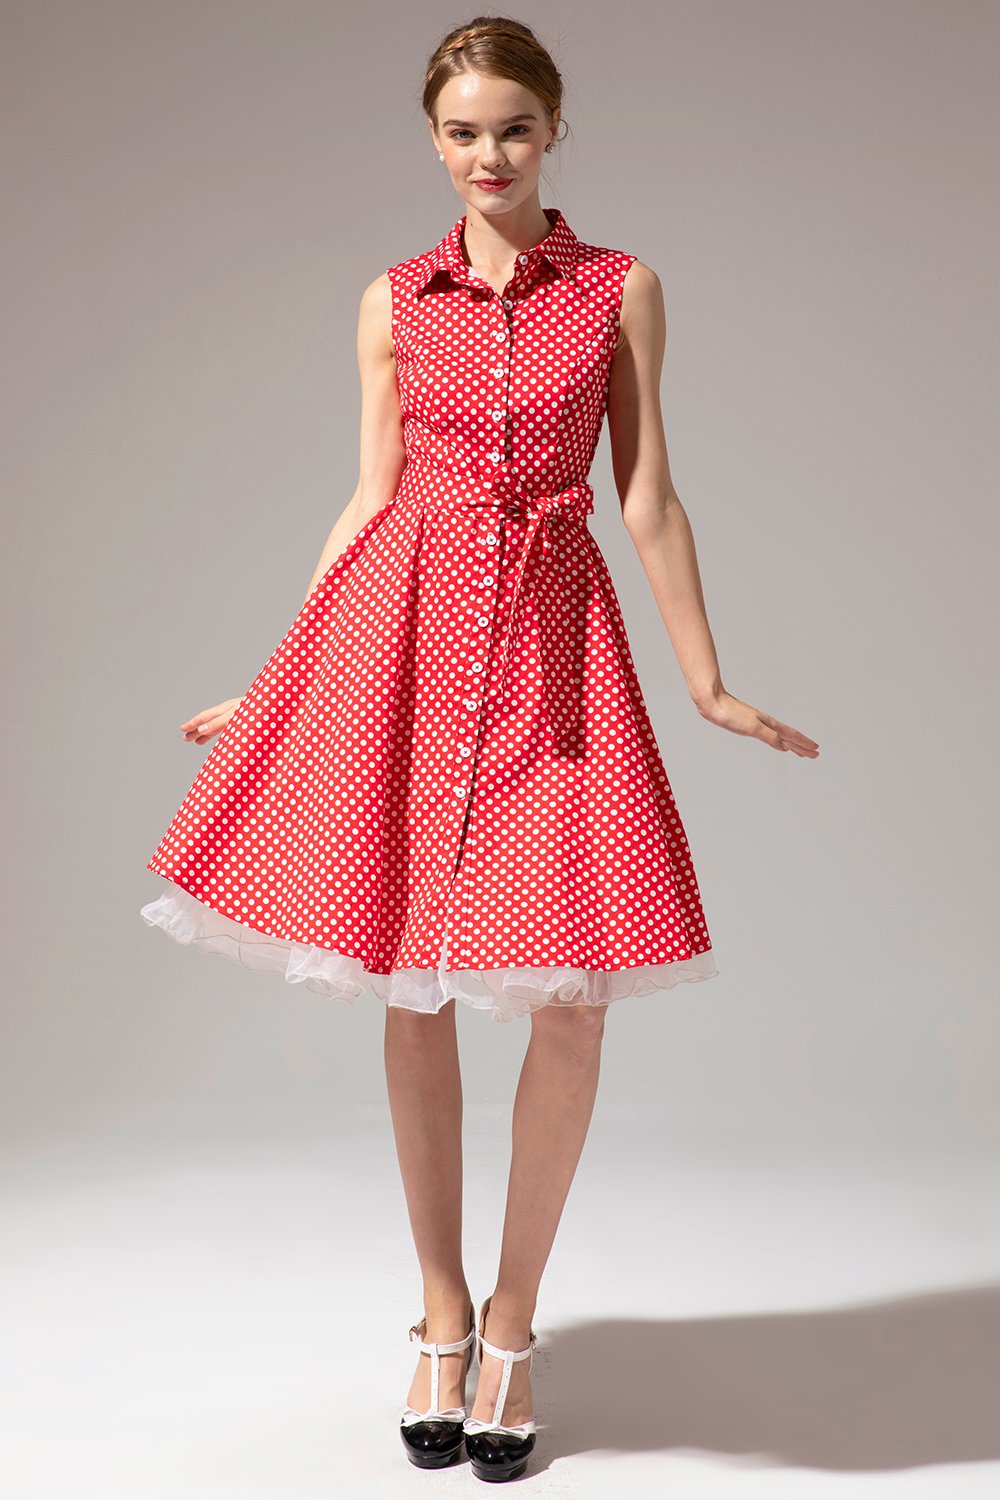 Sleeveless Polka Dot 1950s Dress